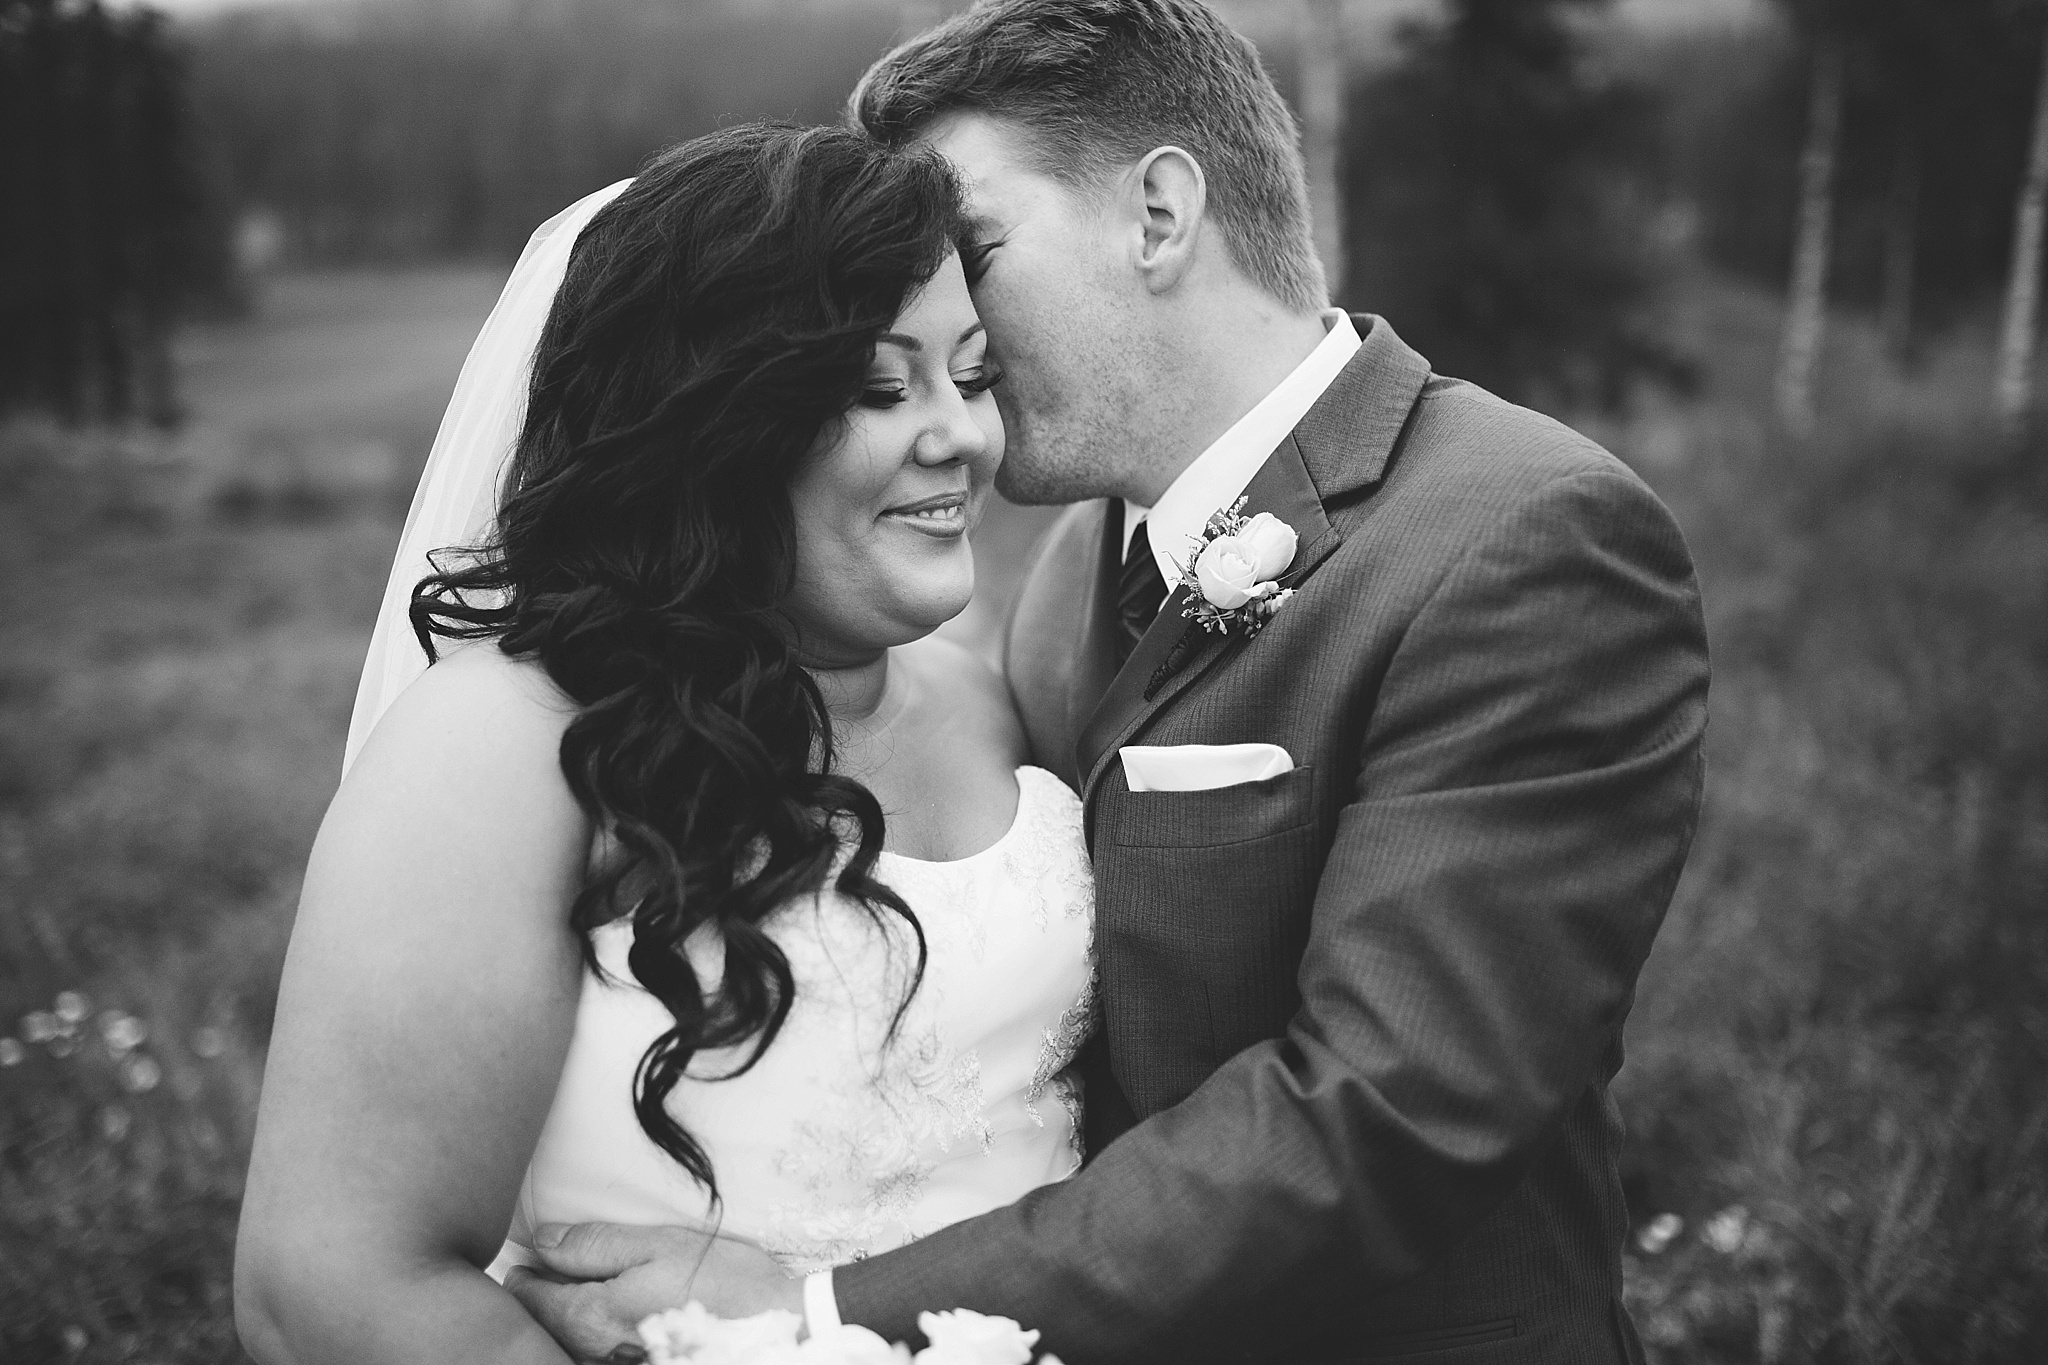 Silvertip Resort Canmore Alberta Wedding Photos Couple Kissing